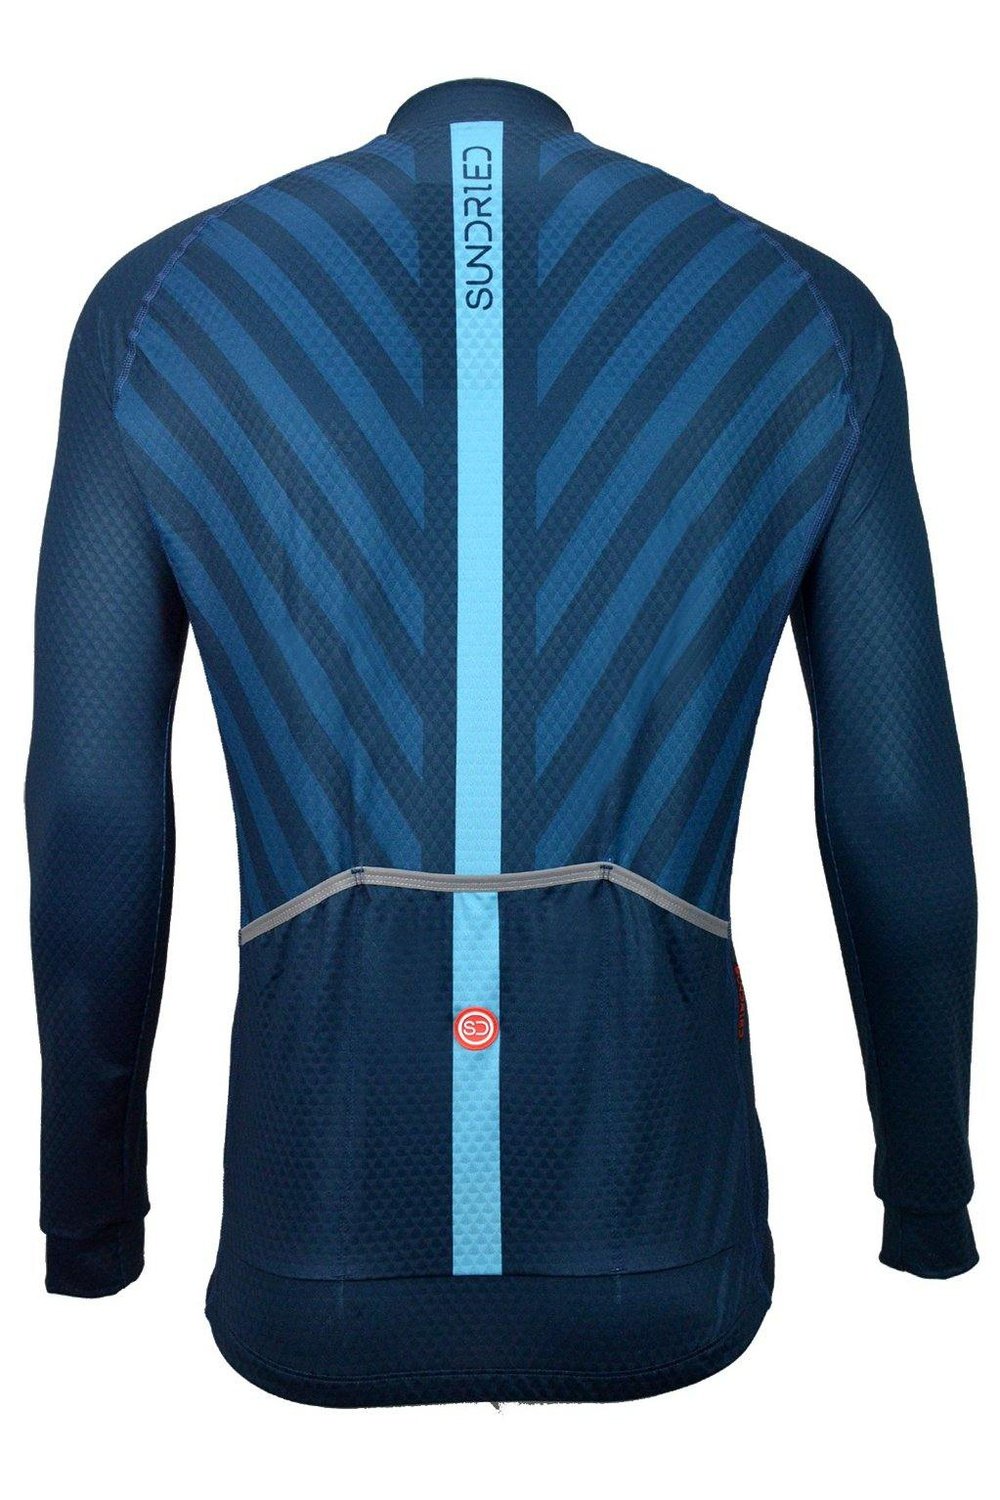 Sundried Cadence Men's Long Sleeve Cycle Jersey Long Sleeve Jersey Activewear